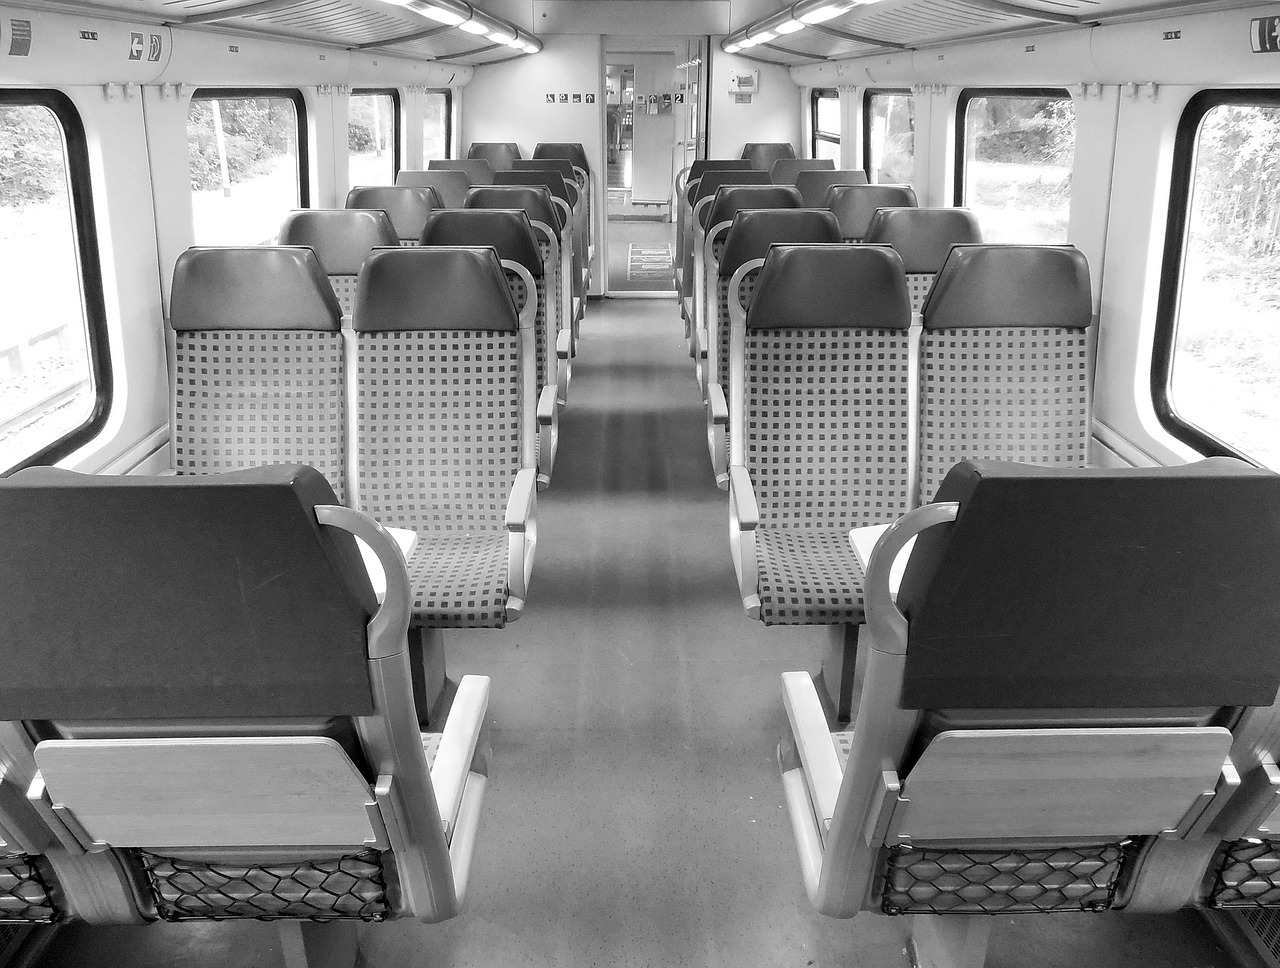 train travel compartment free photo